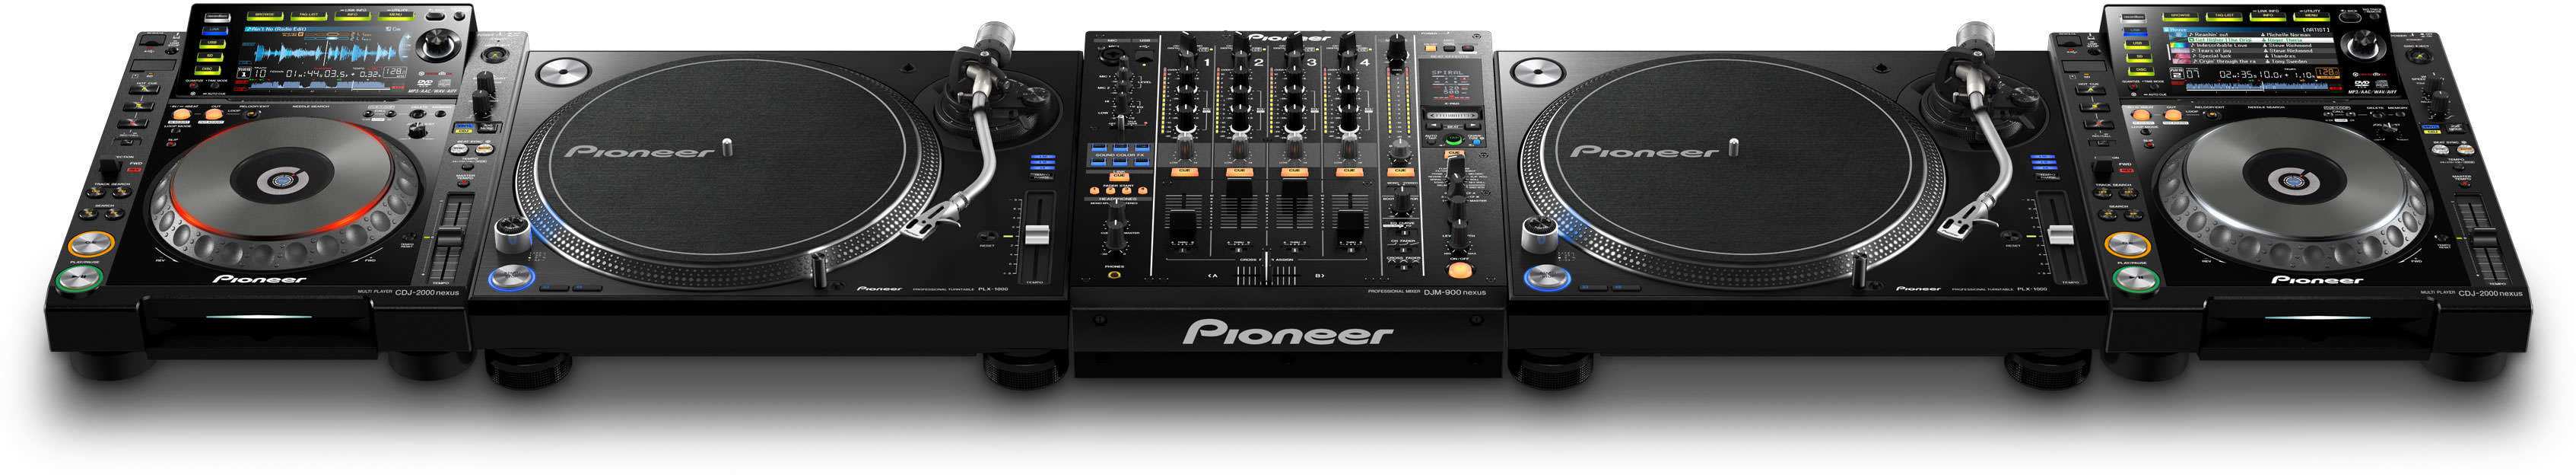 Pioneer PLX 1000 - DJMania